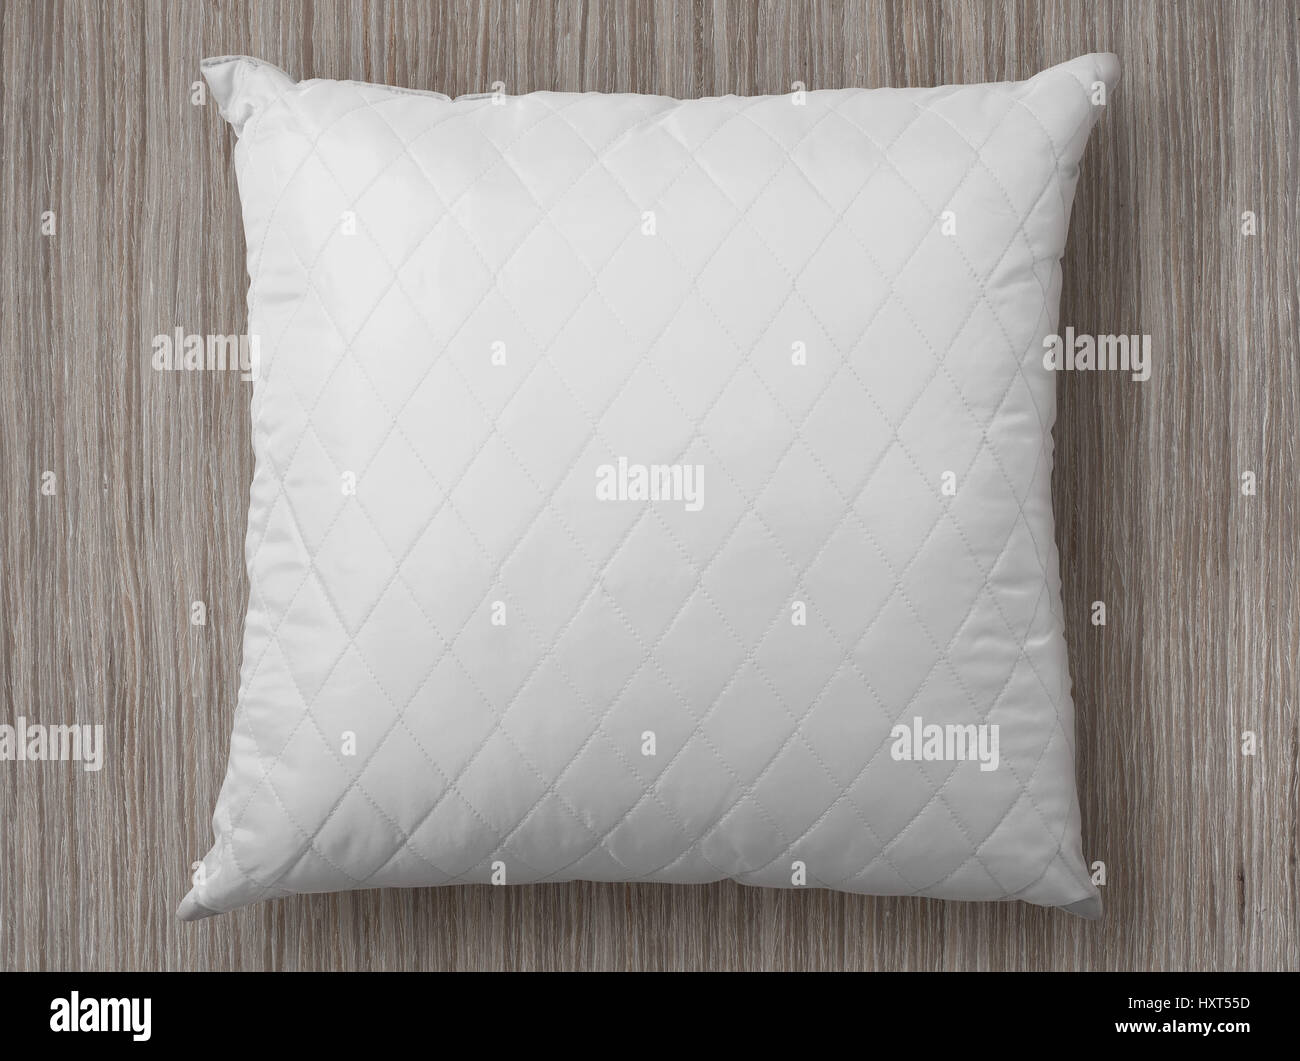 white pillow on wooden floor Stock Photo